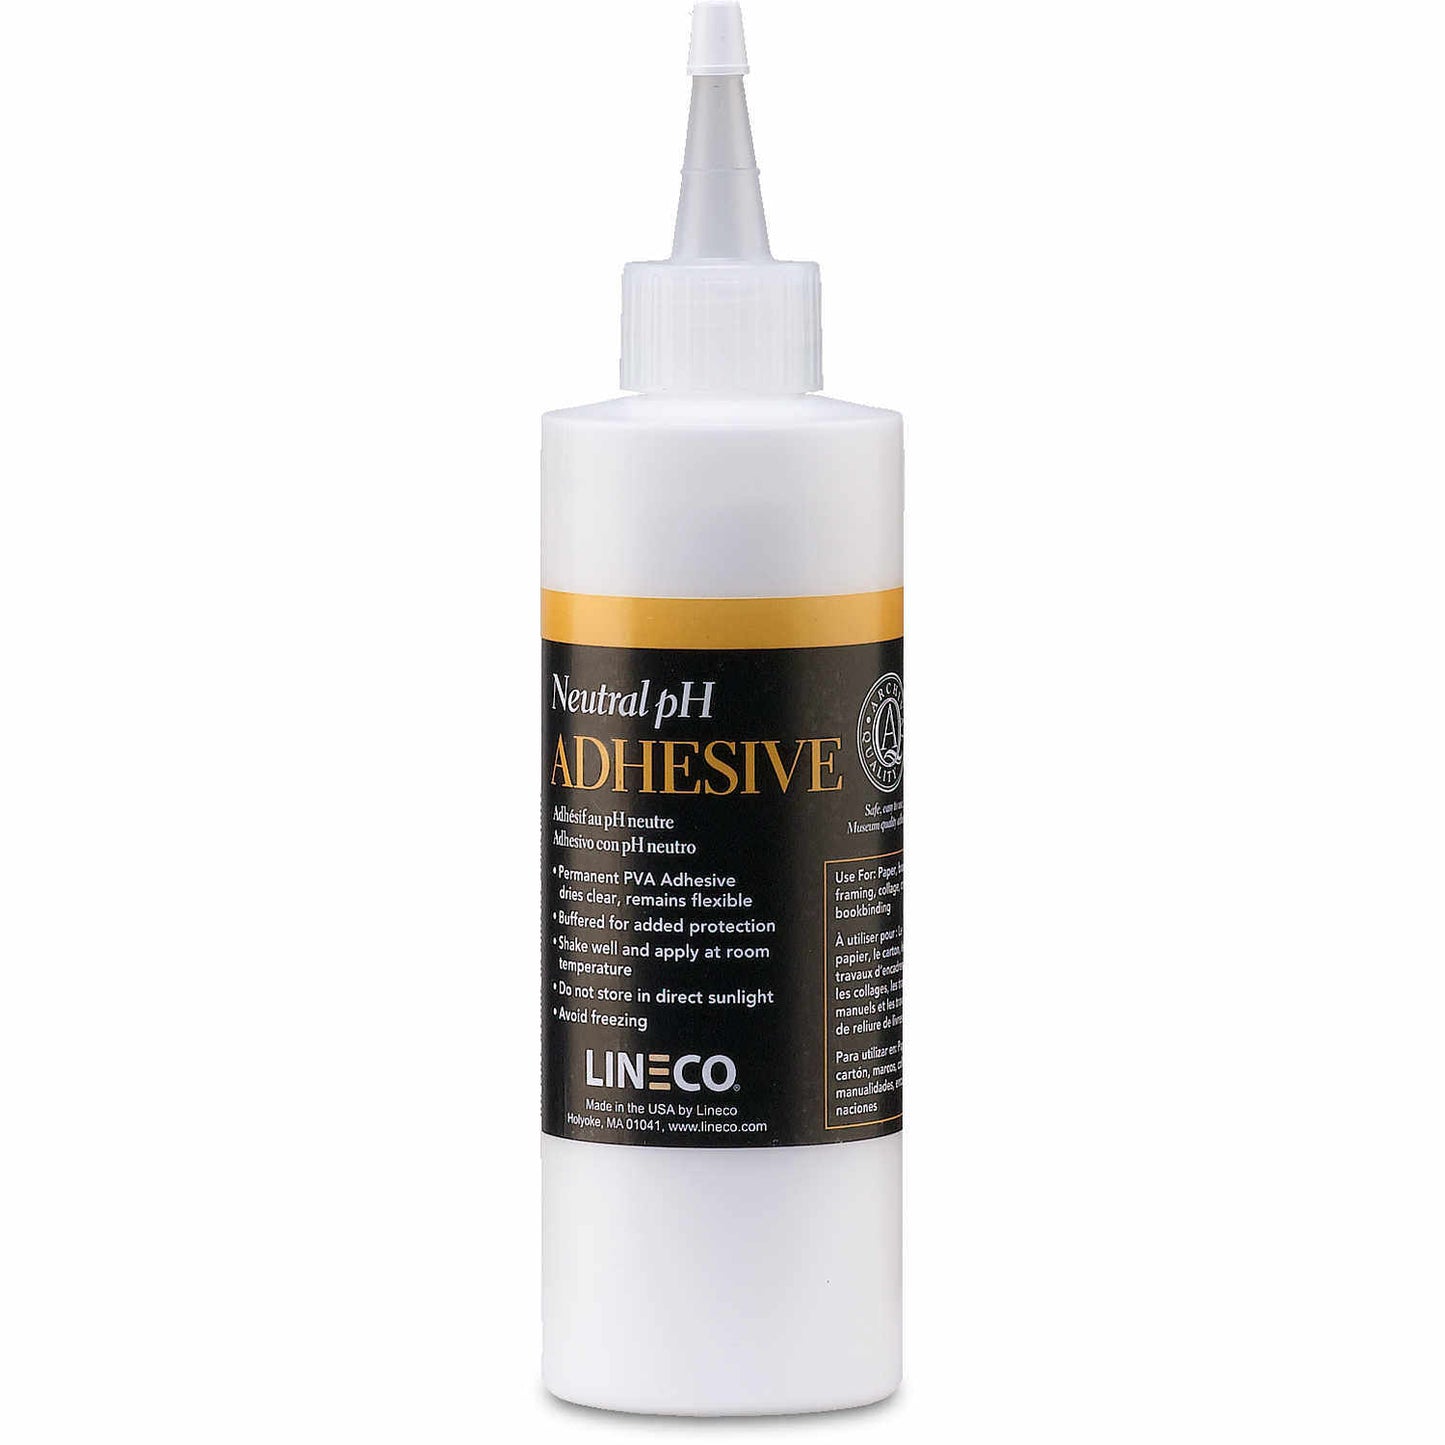 Lineco White Neutral pH Adhesive / PVA Glue - 8 oz. by Lineco - K. A. Artist Shop